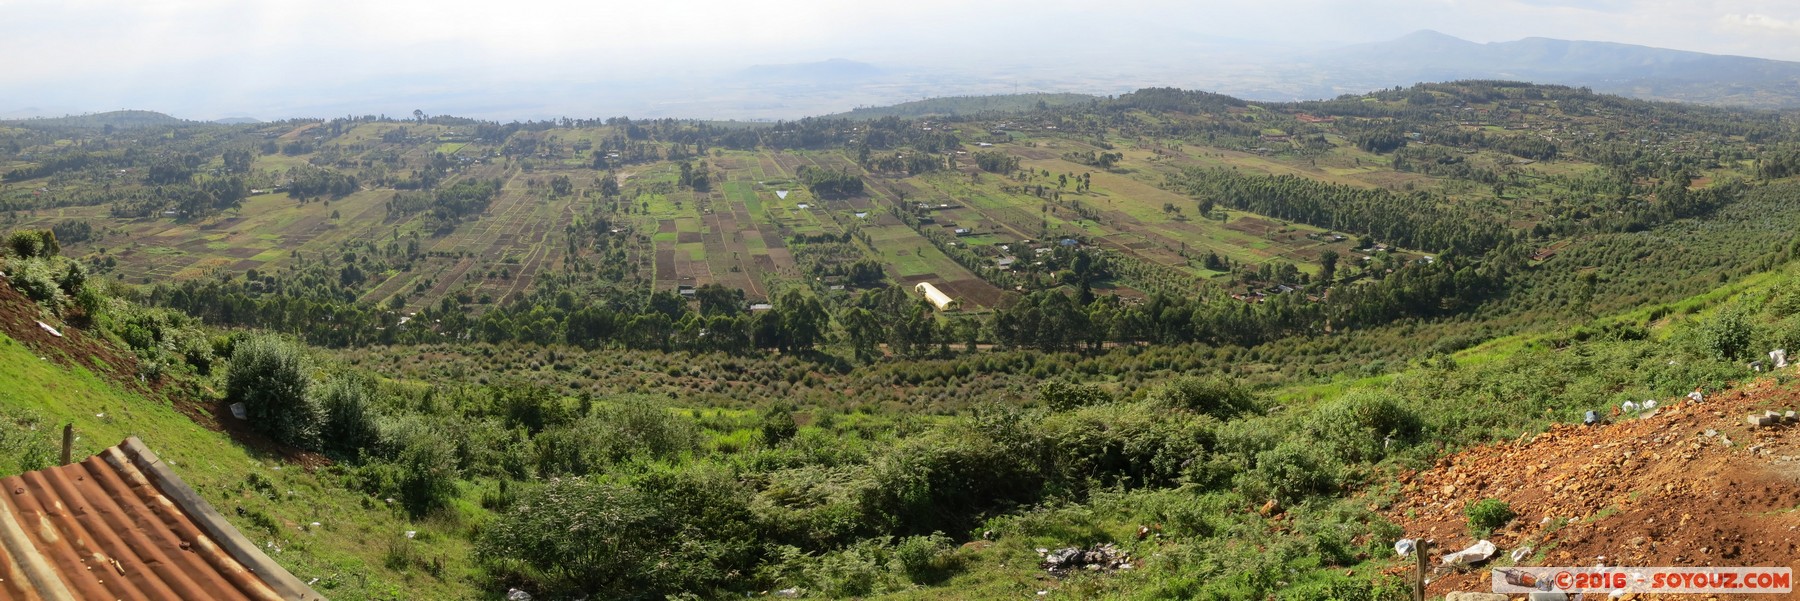 Limuru - Rift Valley lookout - panorama
Stitched Panorama
Mots-clés: KEN Kenya Kiambu Lari panorama